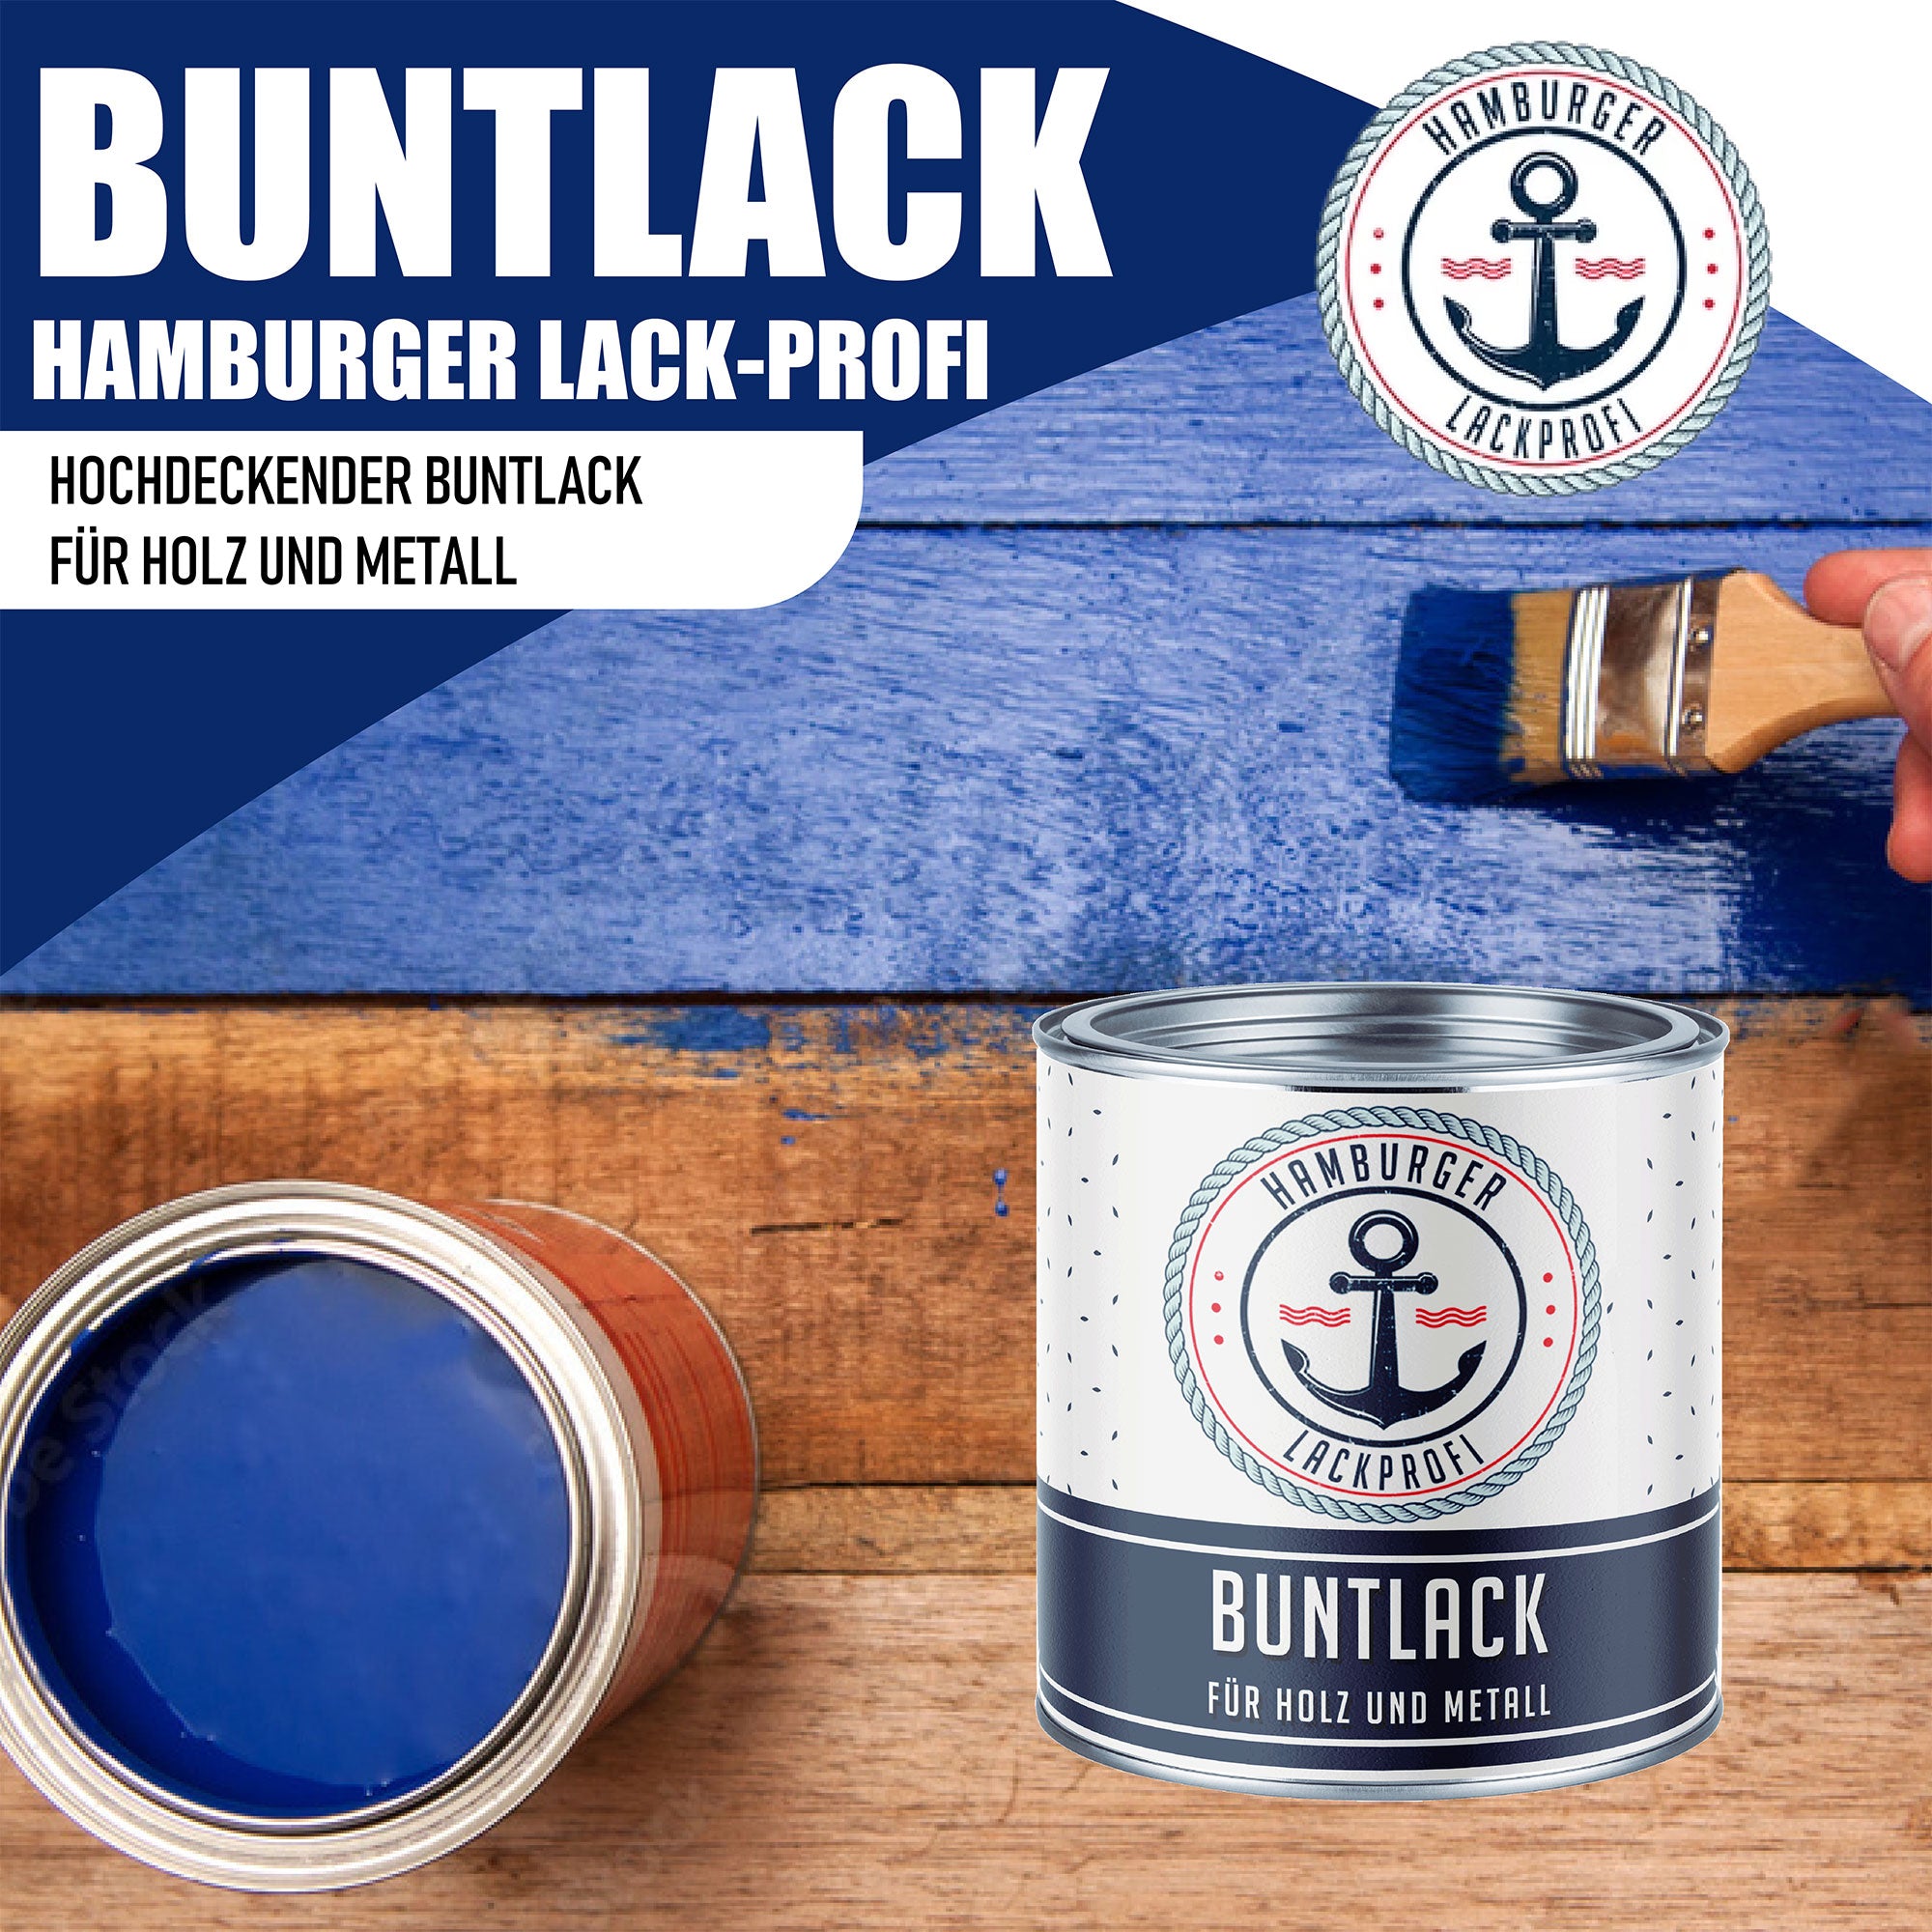 Hamburger Lack-Profi Buntlack Sonnengelb RAL 1037 - Robuster Kunstharzlack